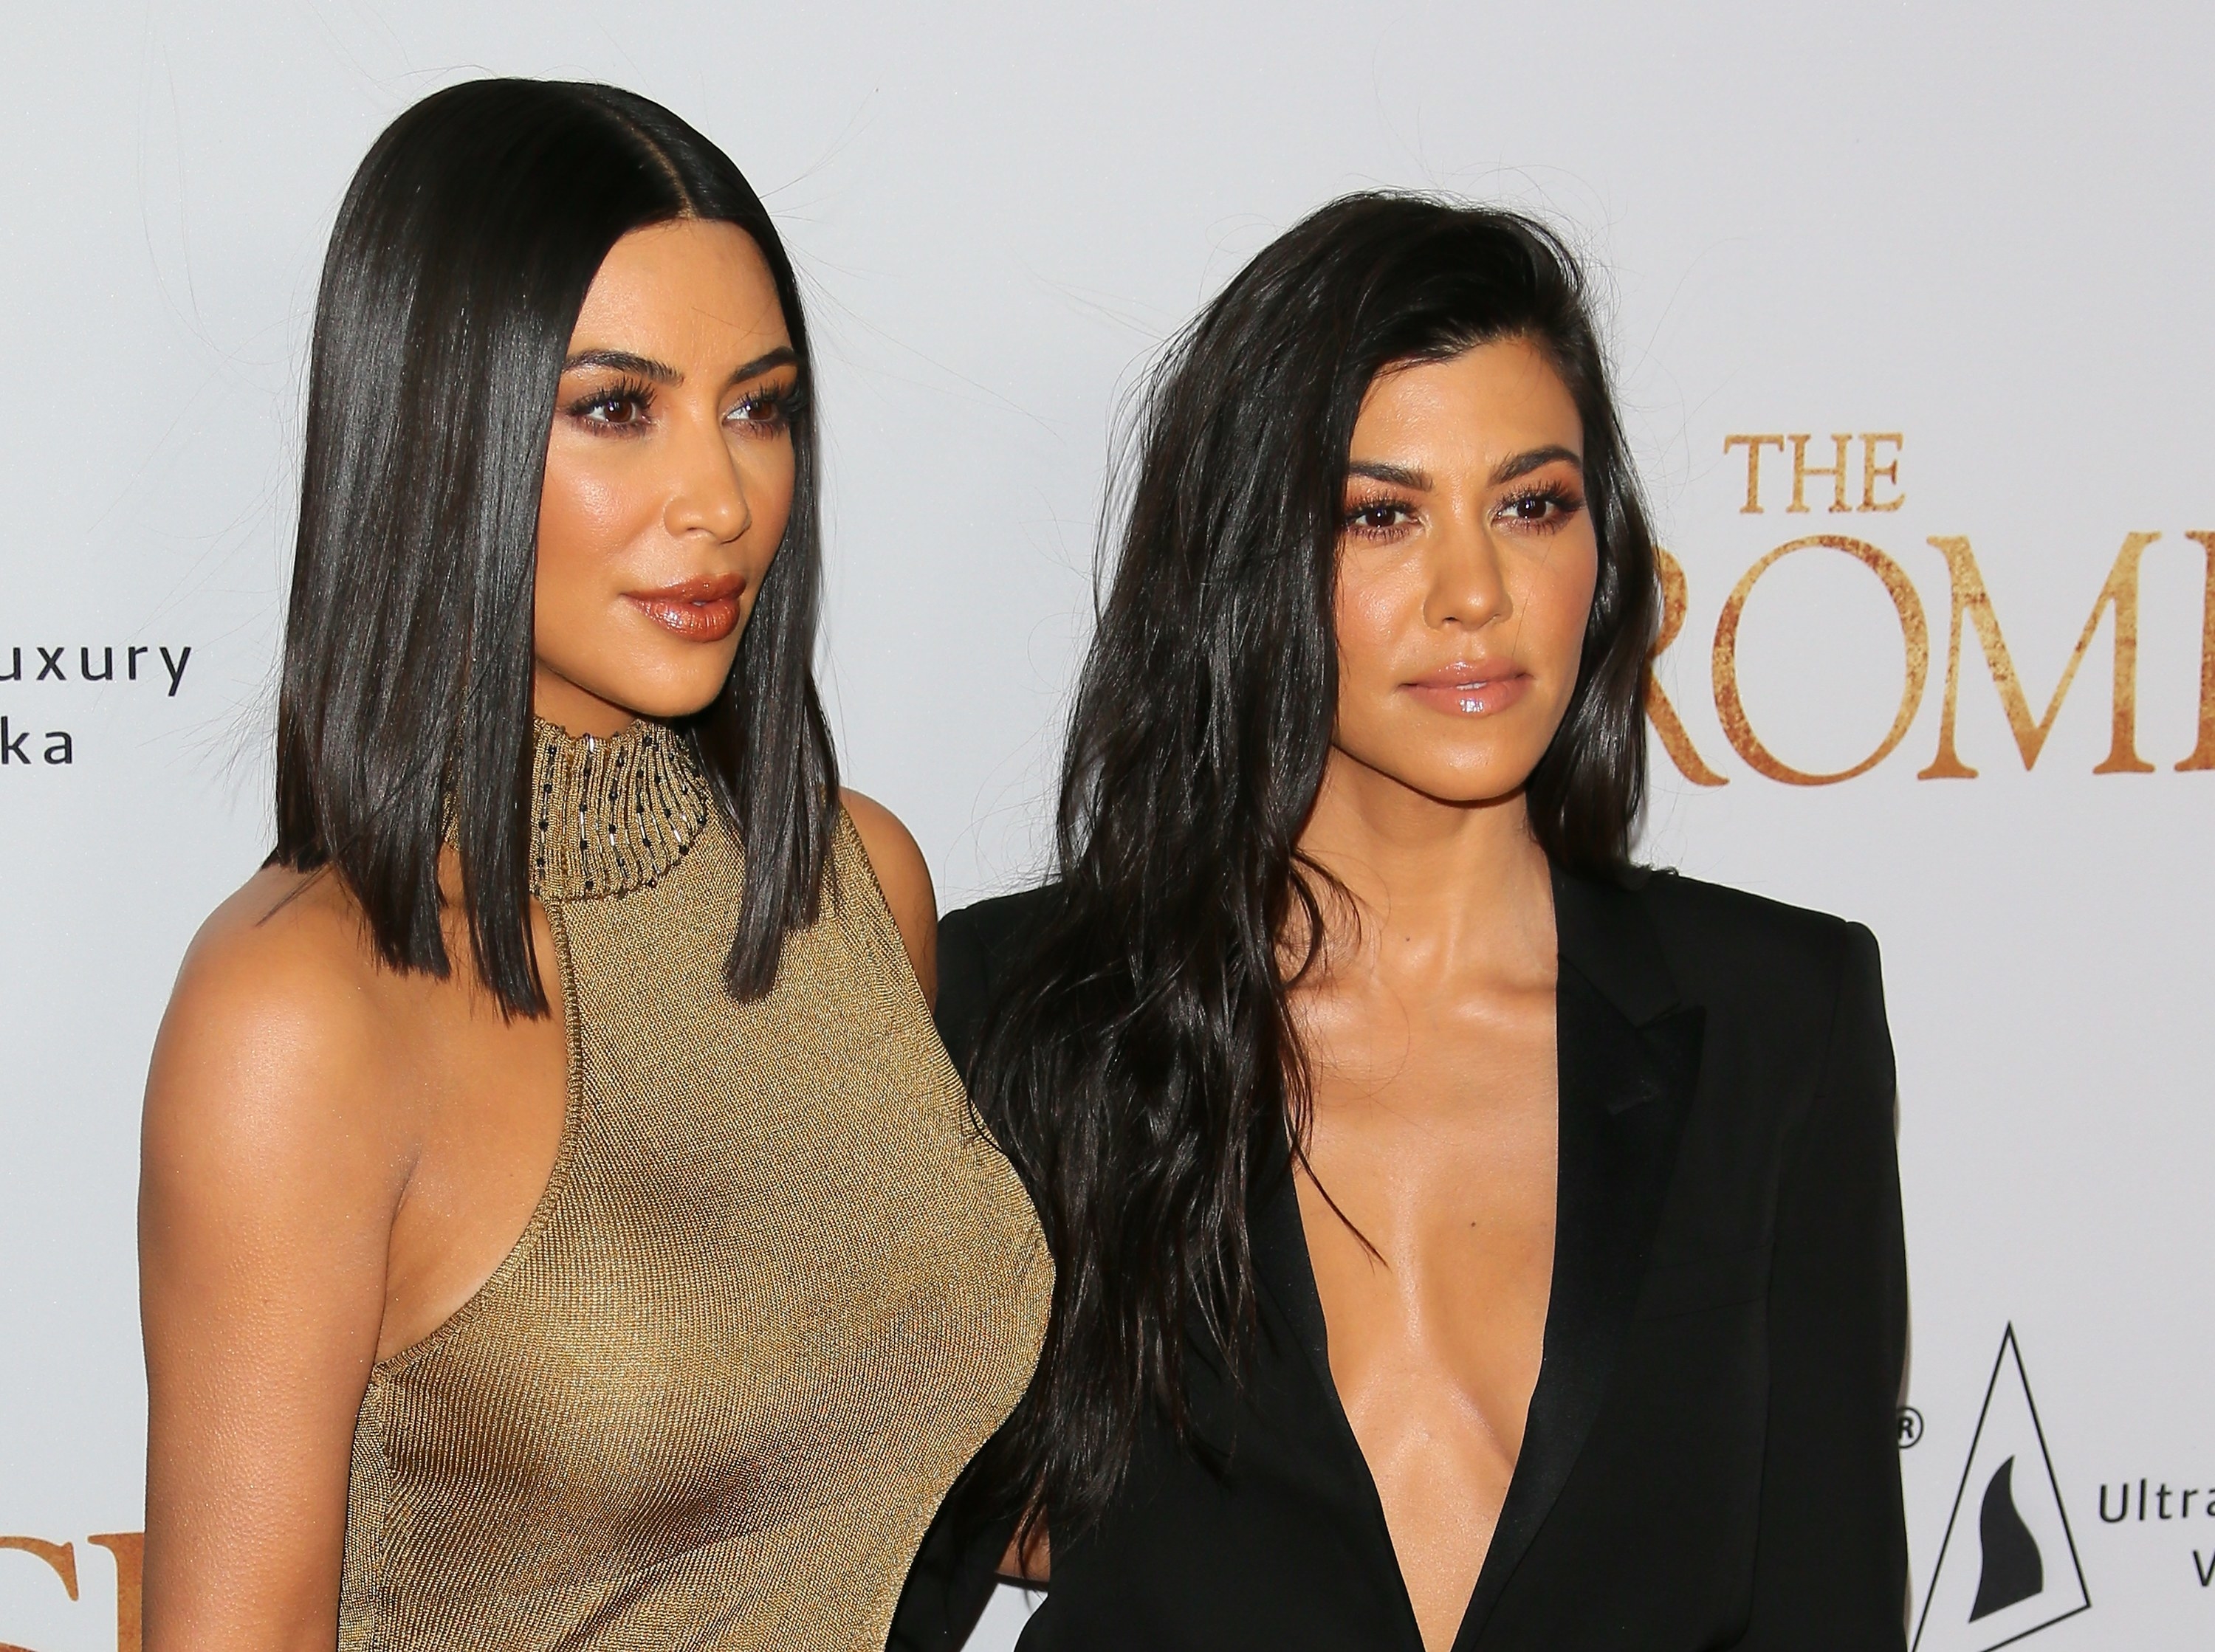 Kim Kardashian's fans say she looks 'so tiny' as she poses in